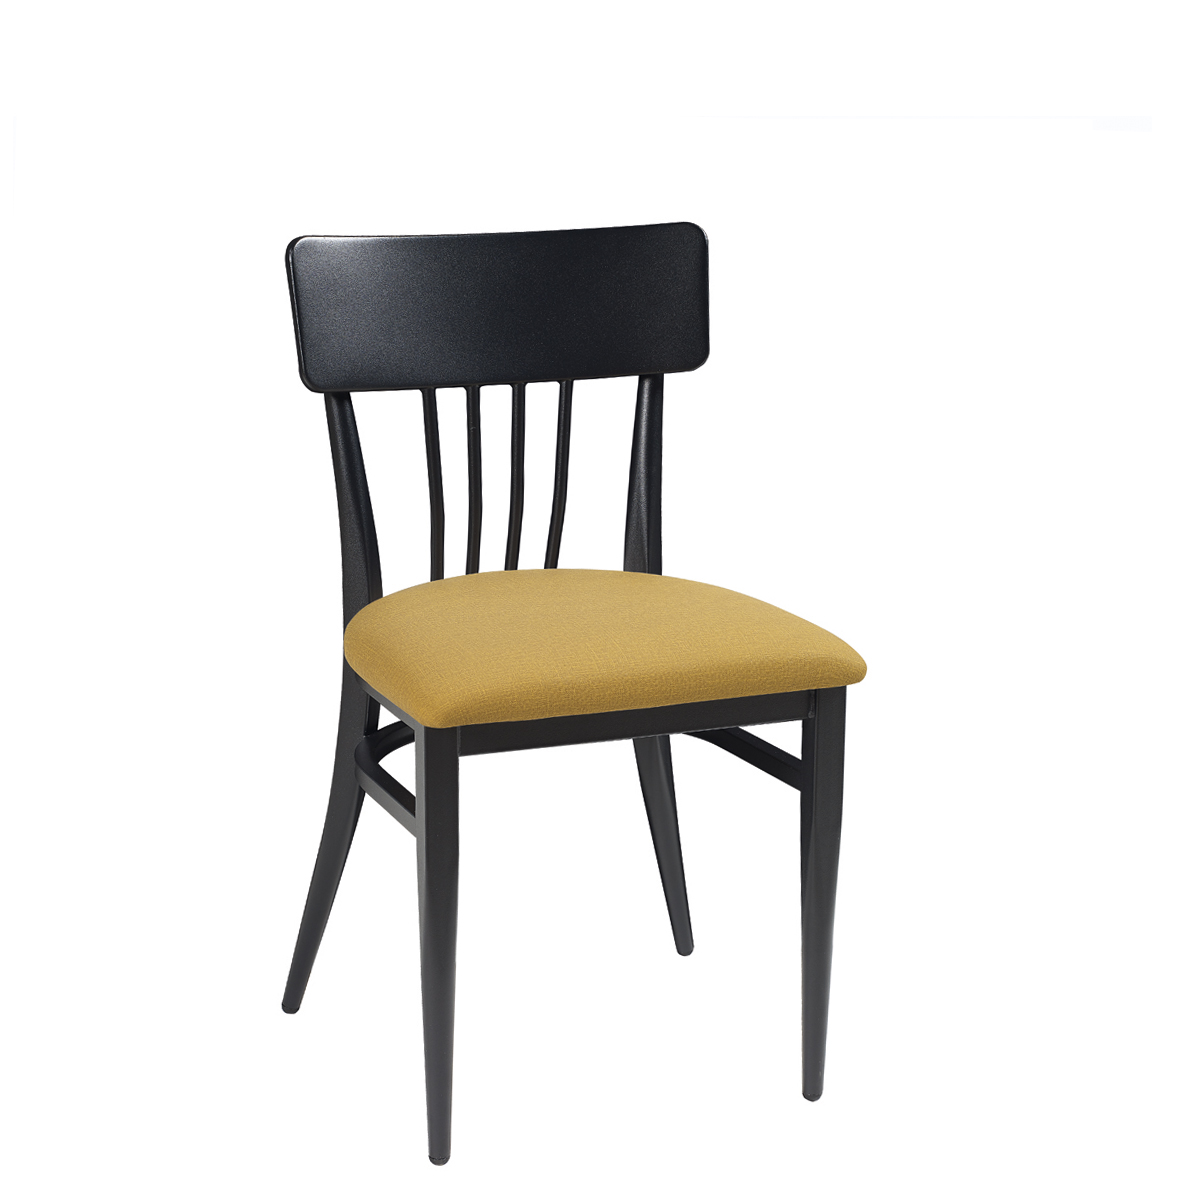 nebraska-silla-negro-tapizado-mostaza